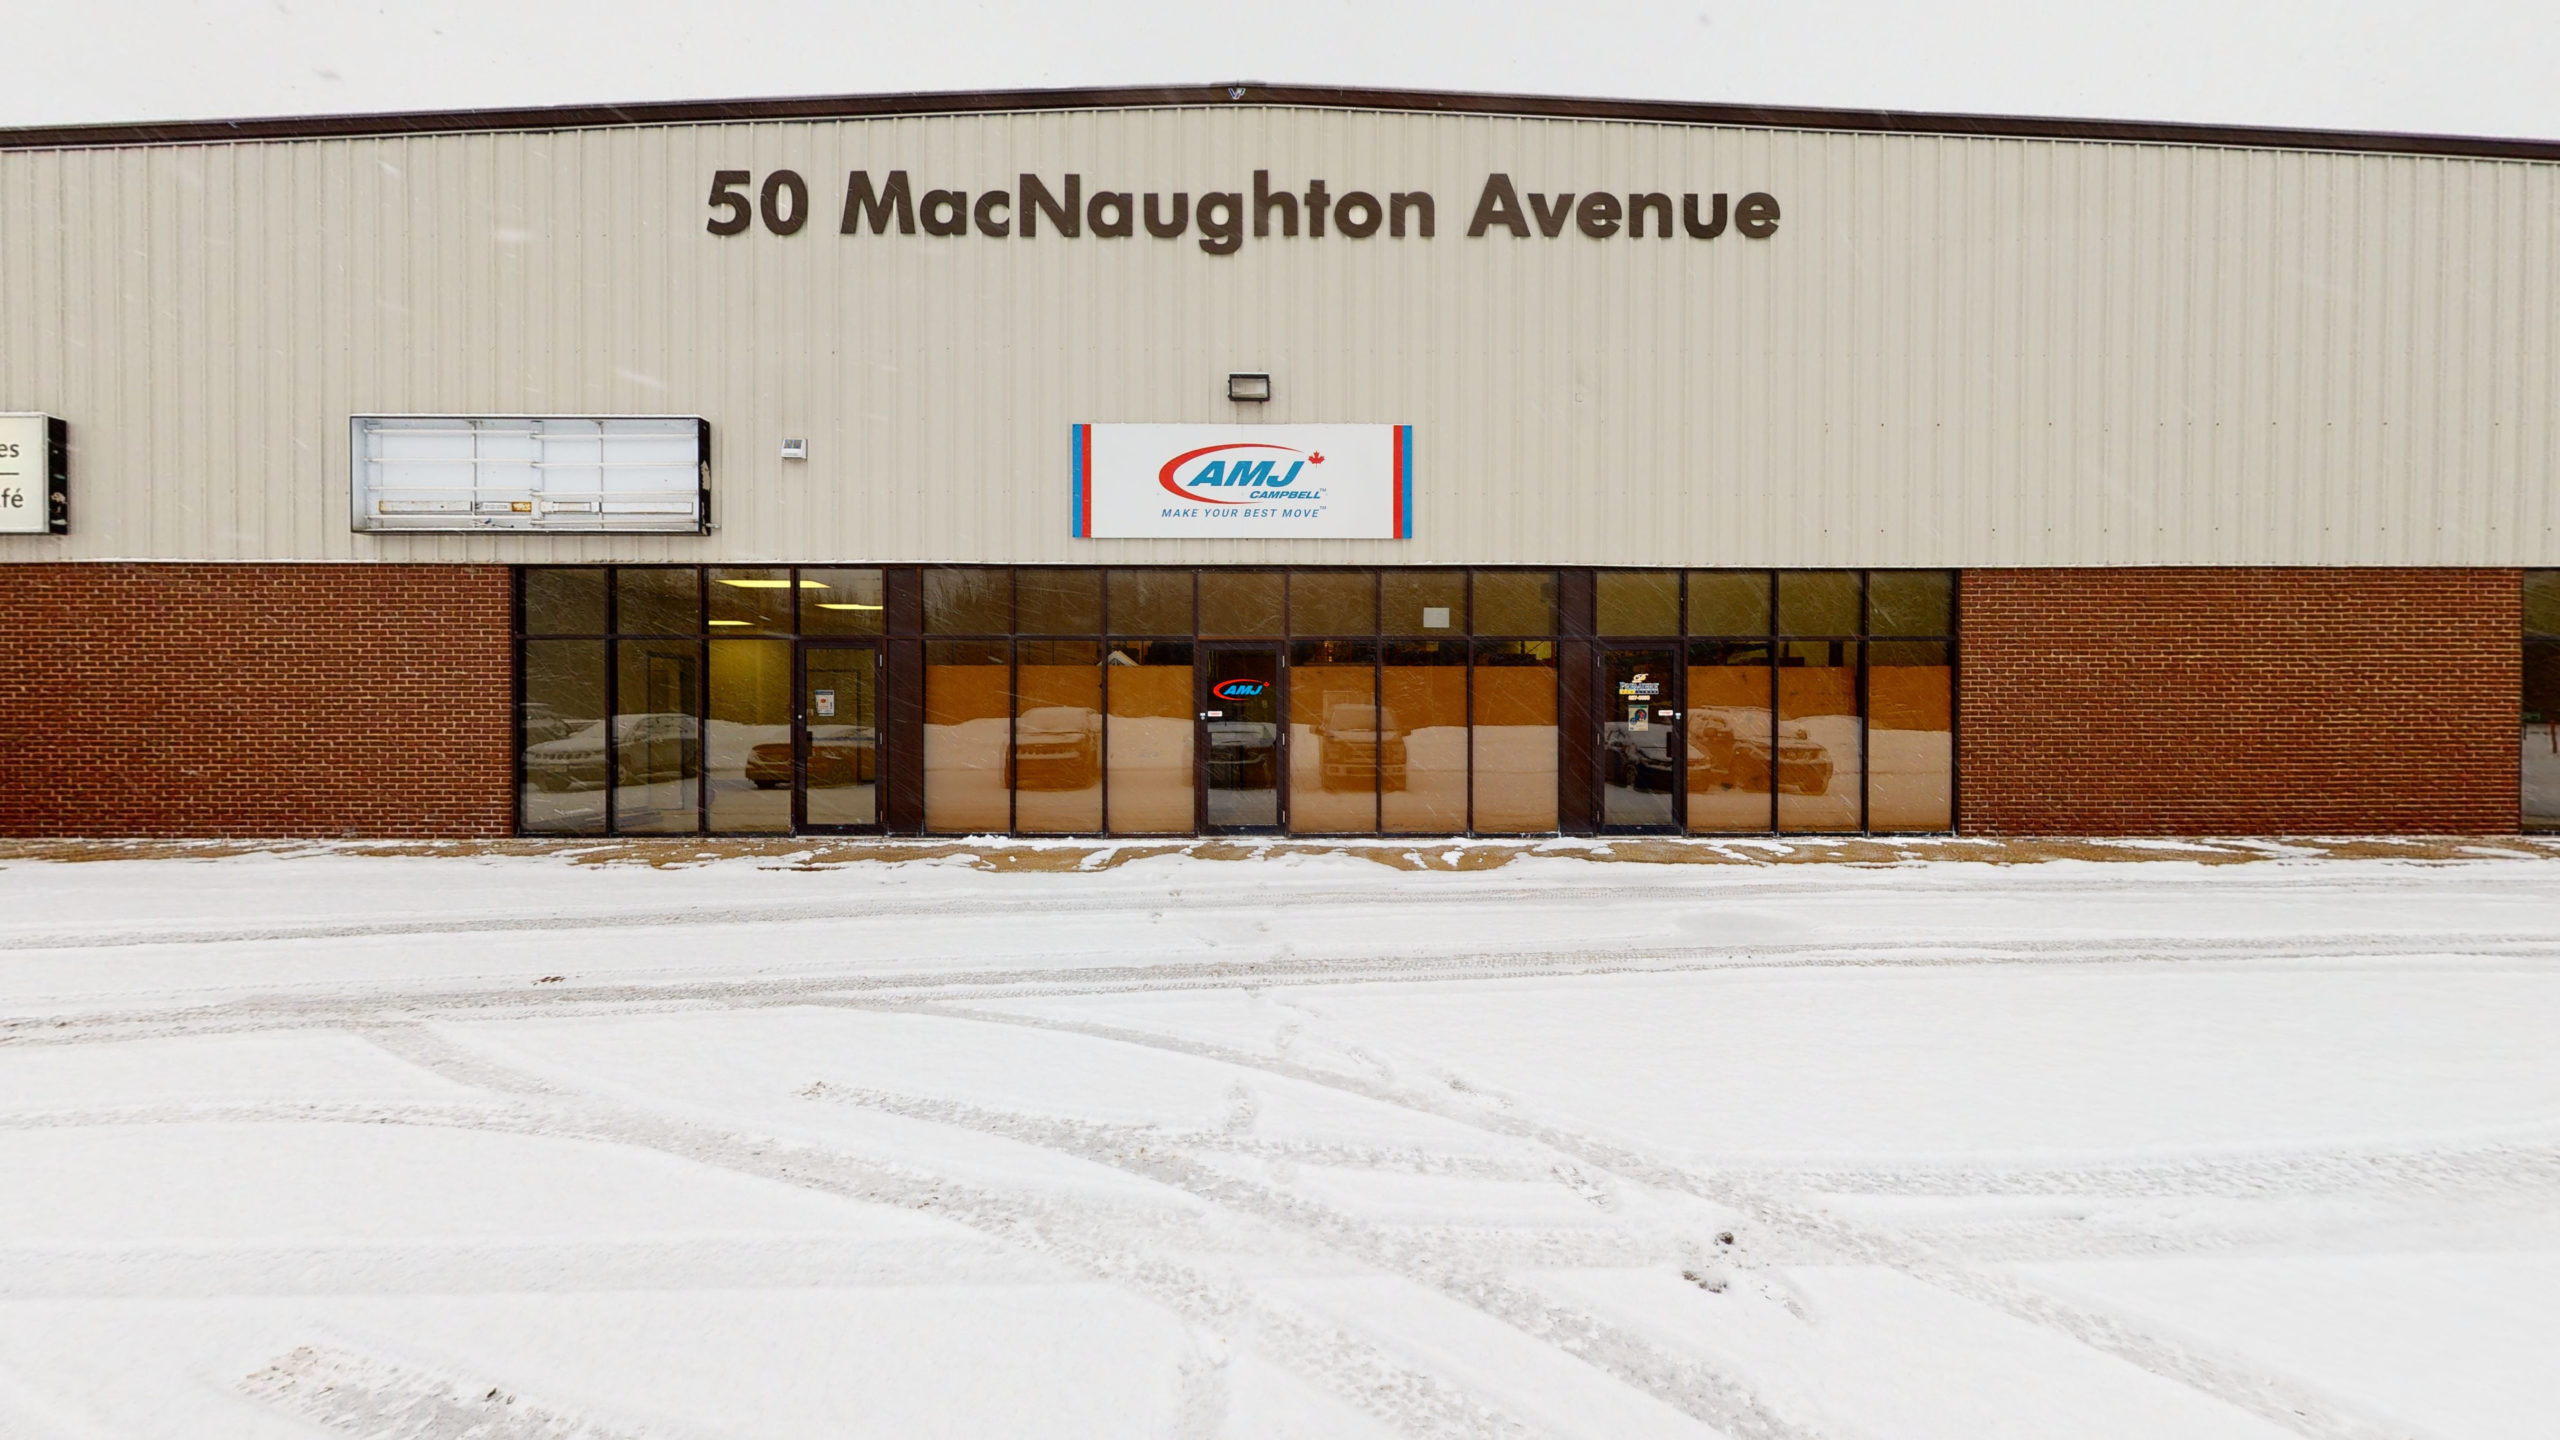 50 MacNaughton Avenue